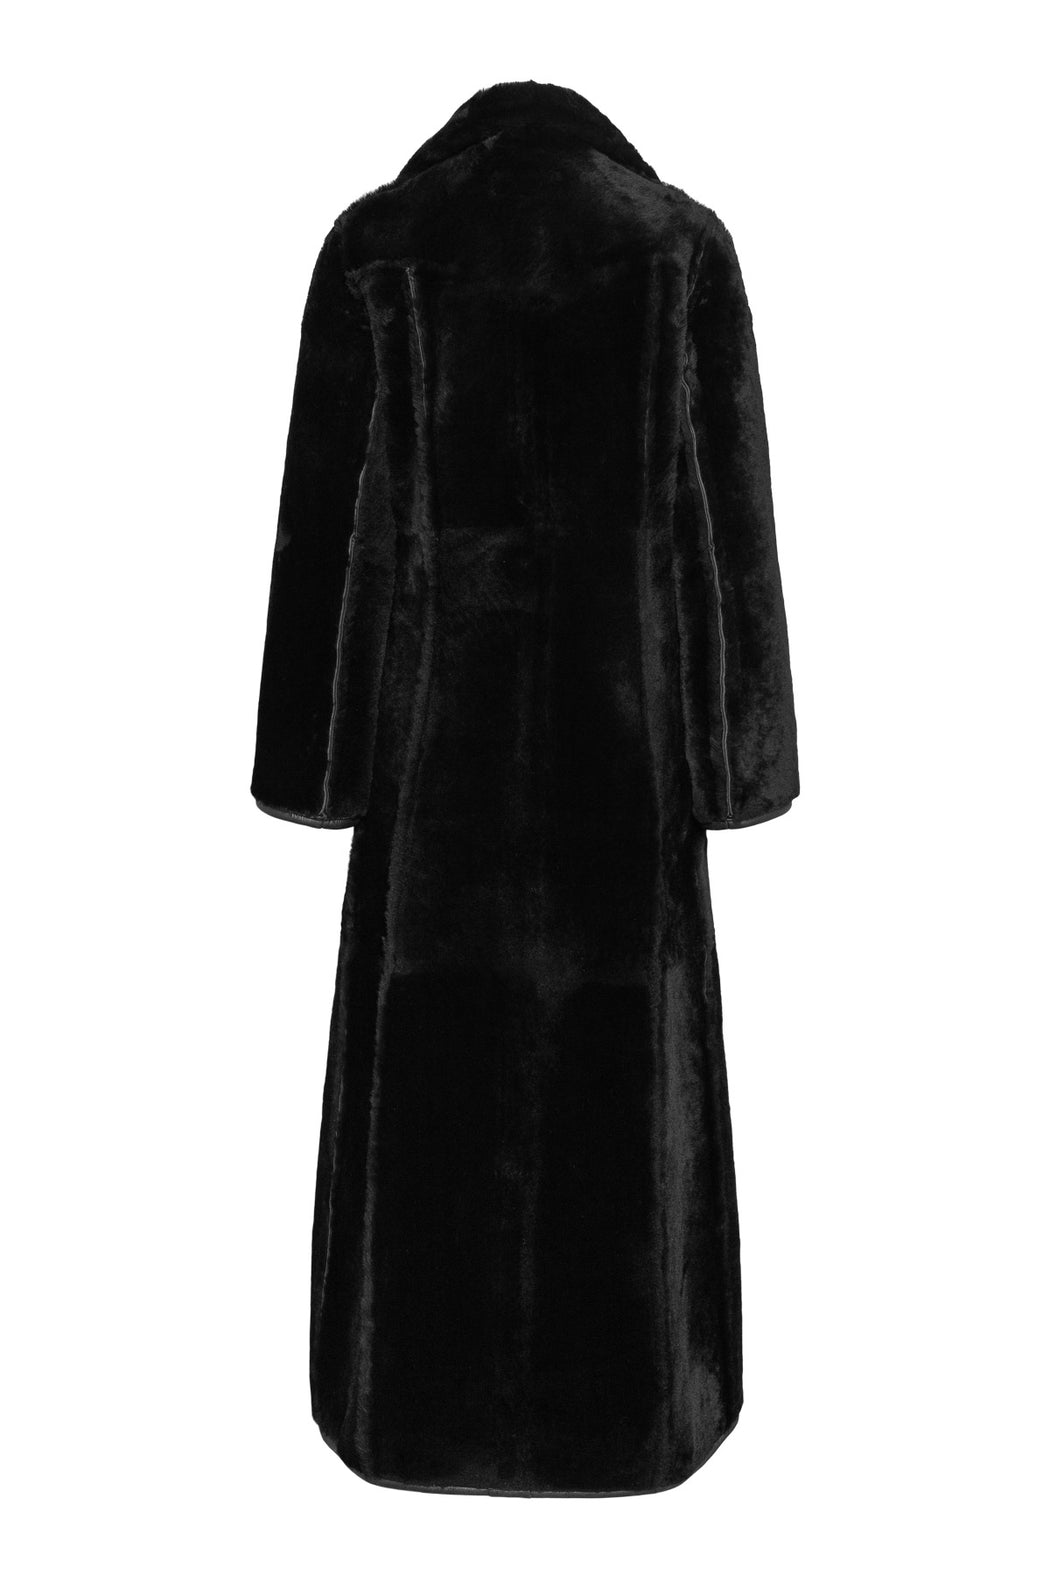 Envelope1976 Woodstock coat II, Black Coat Black